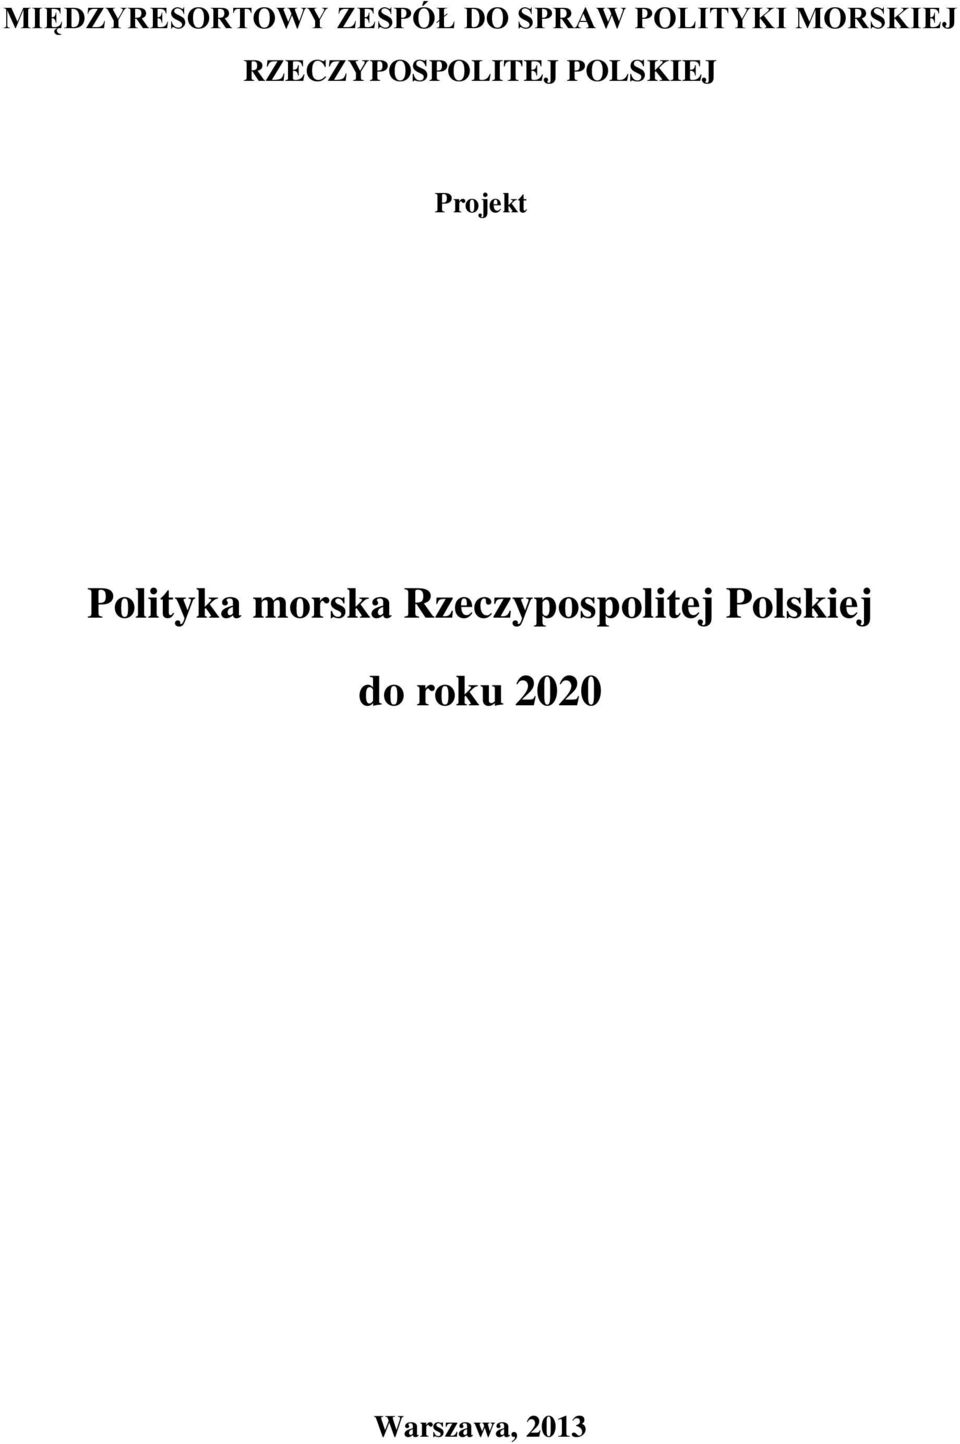 POLSKIEJ Projekt Polityka morska